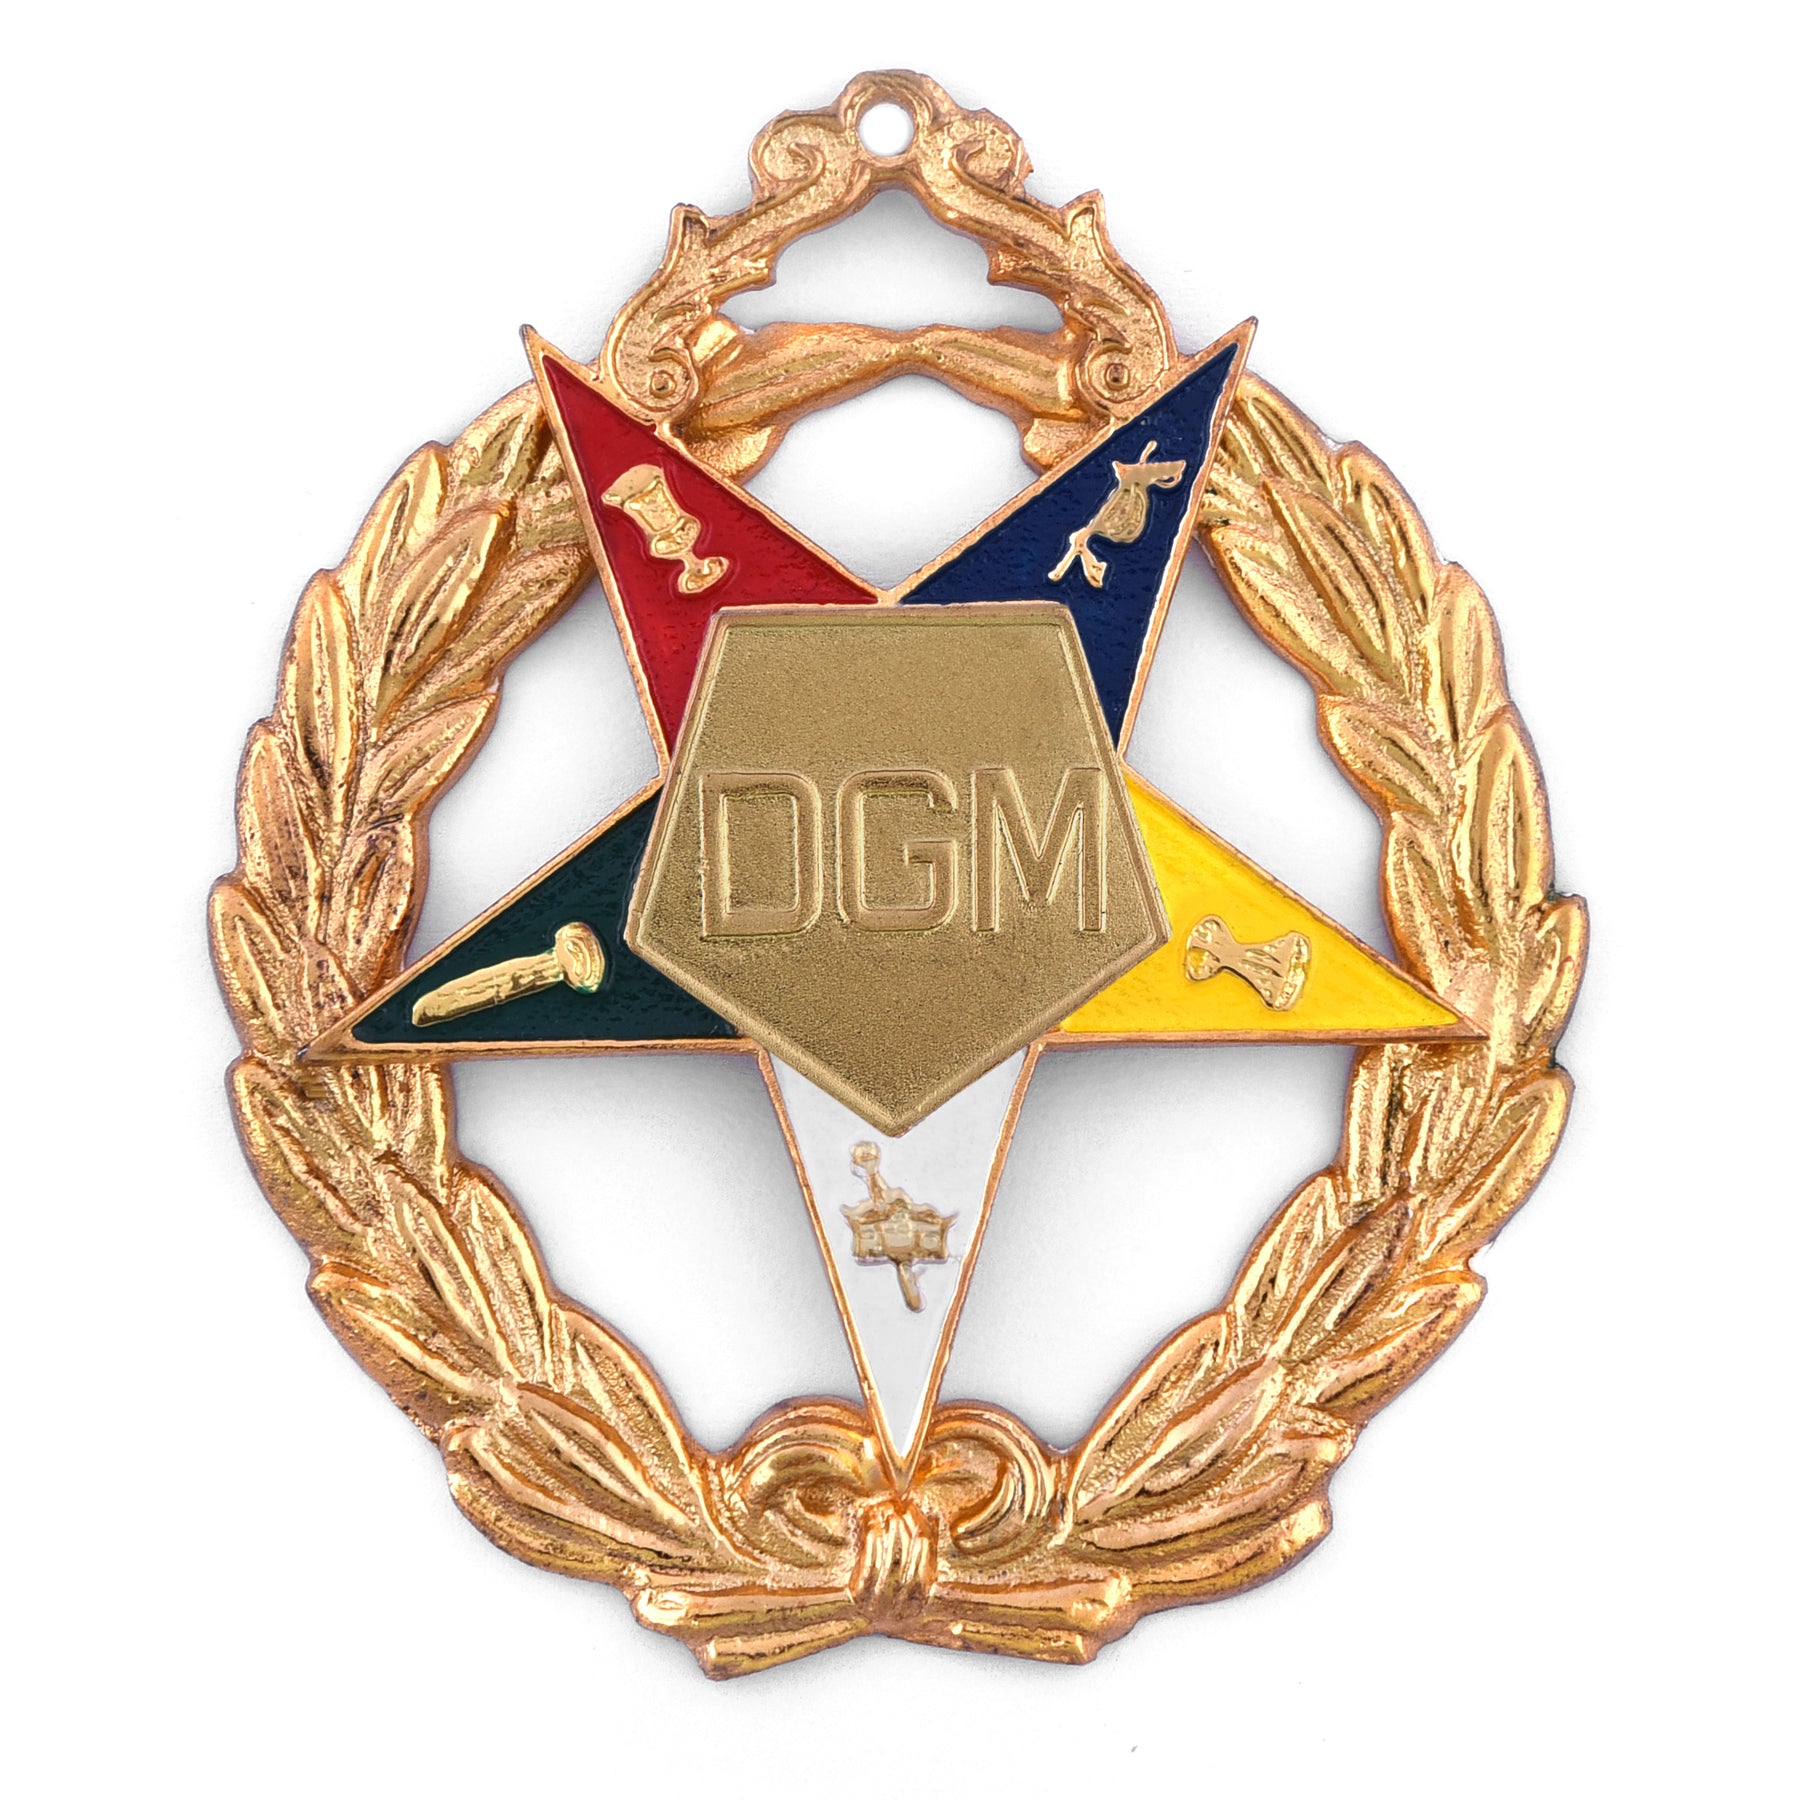 District Grand Matron OES Officer Collar Jewel - Gold Plated - Bricks Masons